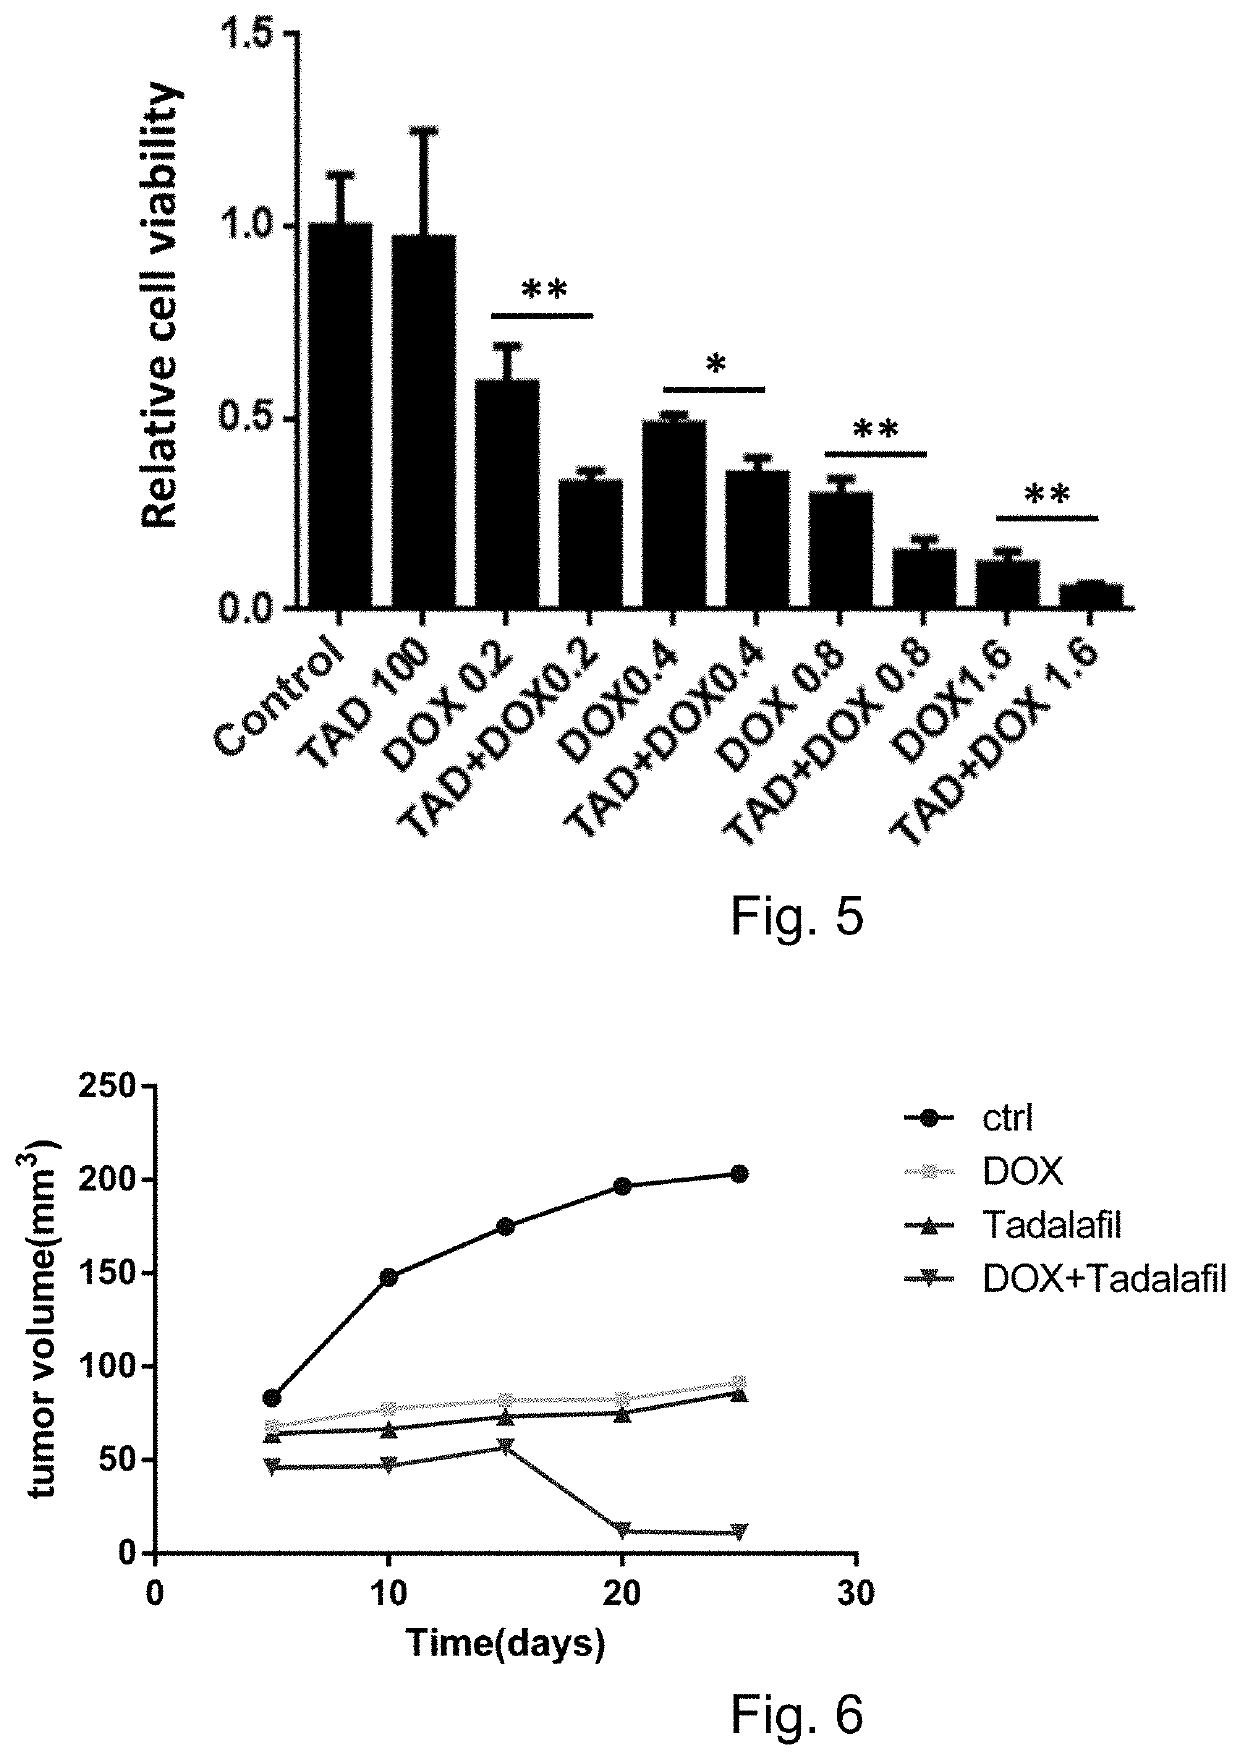 Use of tadalafil as protein arginine methyltransferase (PRMT5) inhibitor